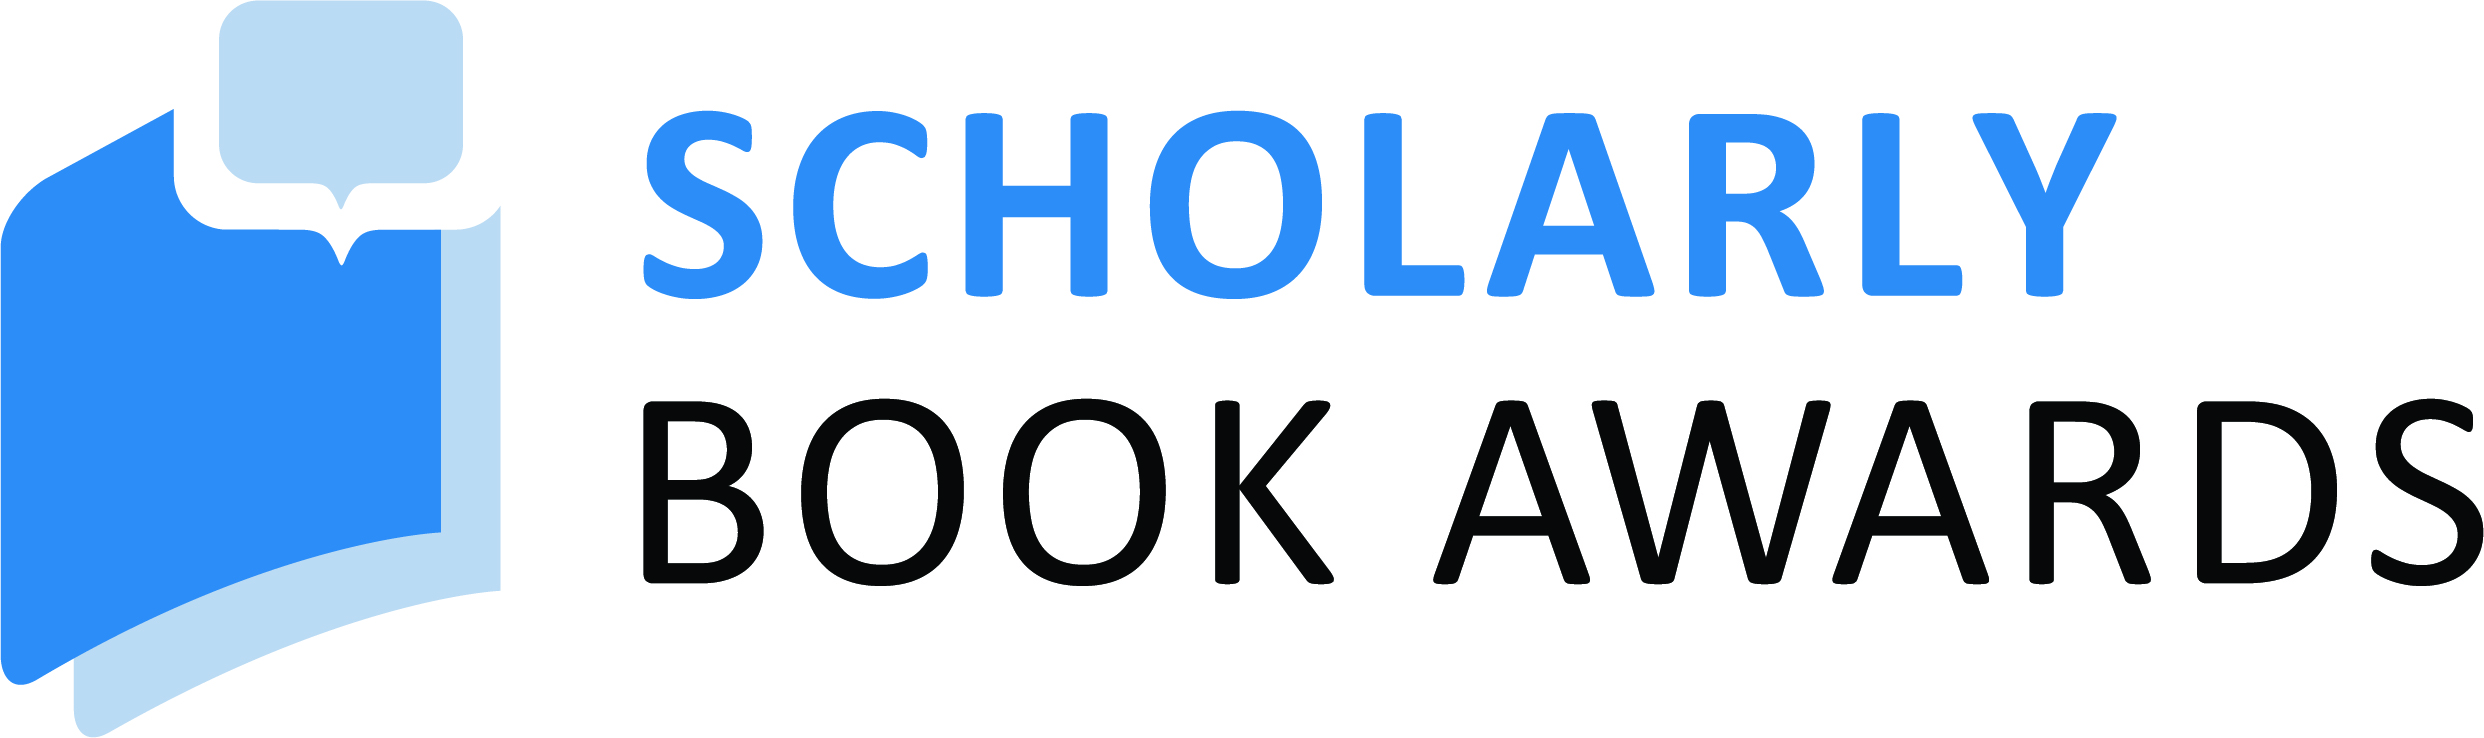 Scholarly book awards logo